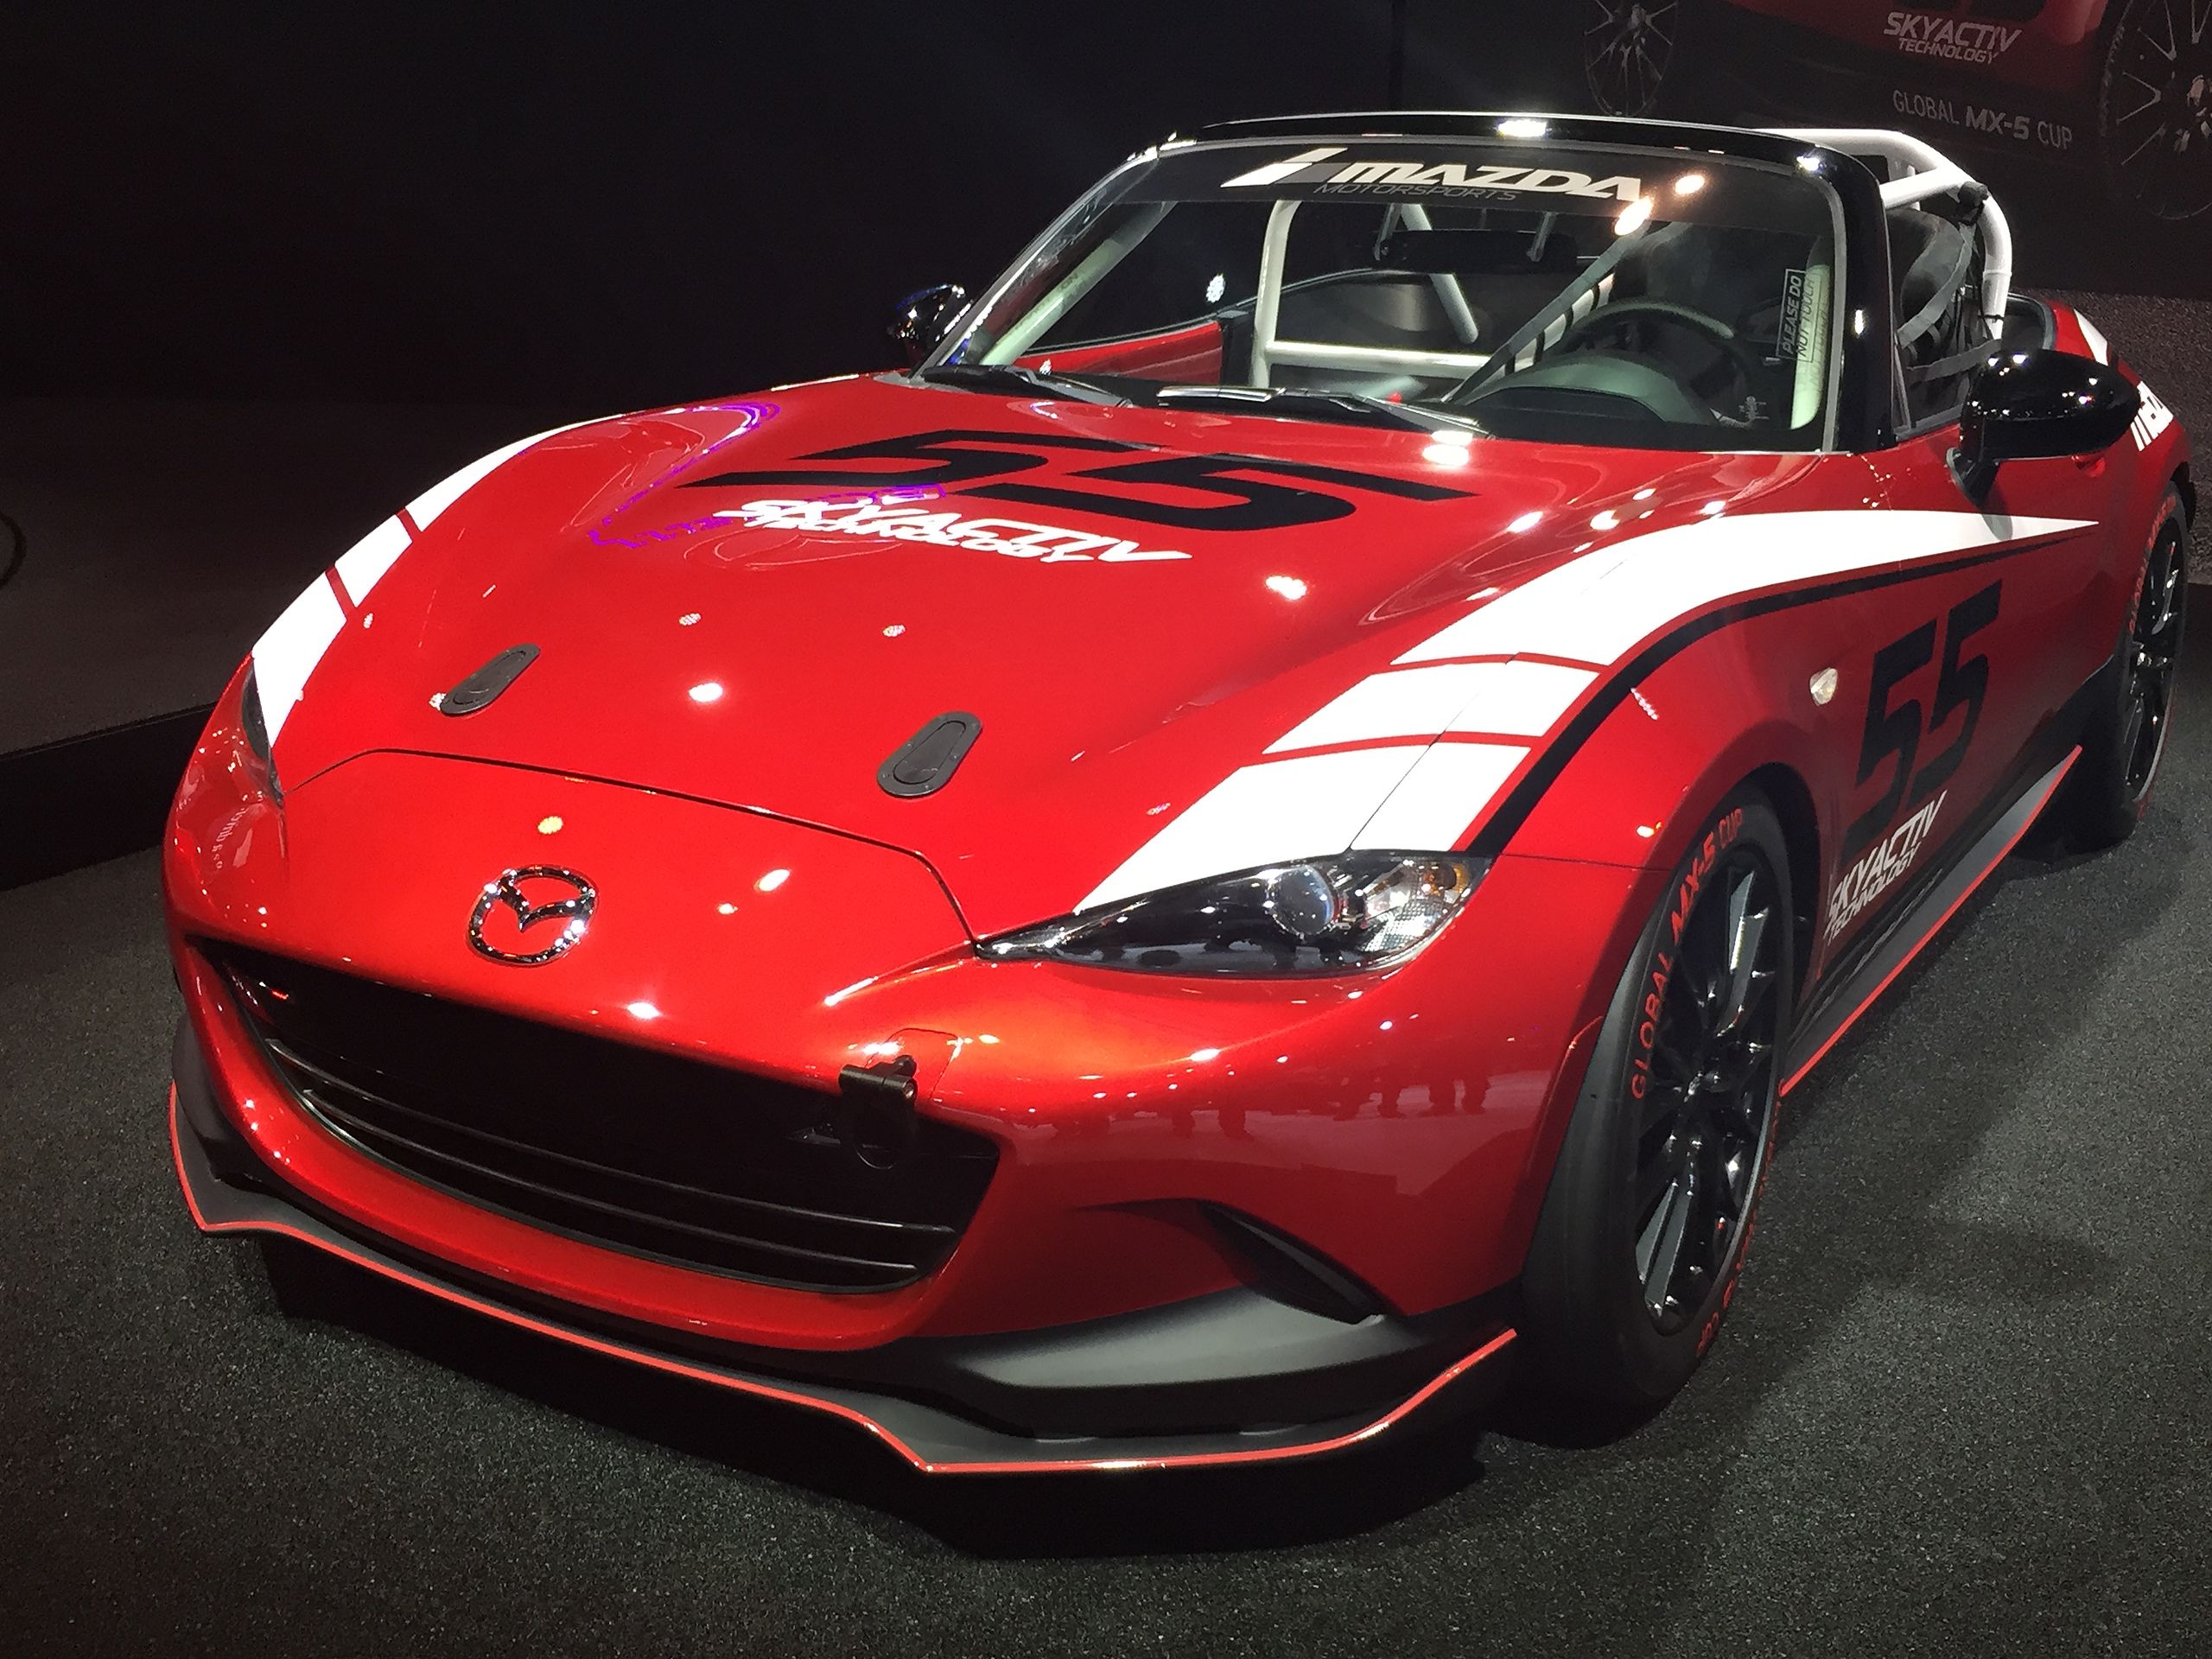 Global MX-5 Cup car - Tokyo Auto Salon 2015
